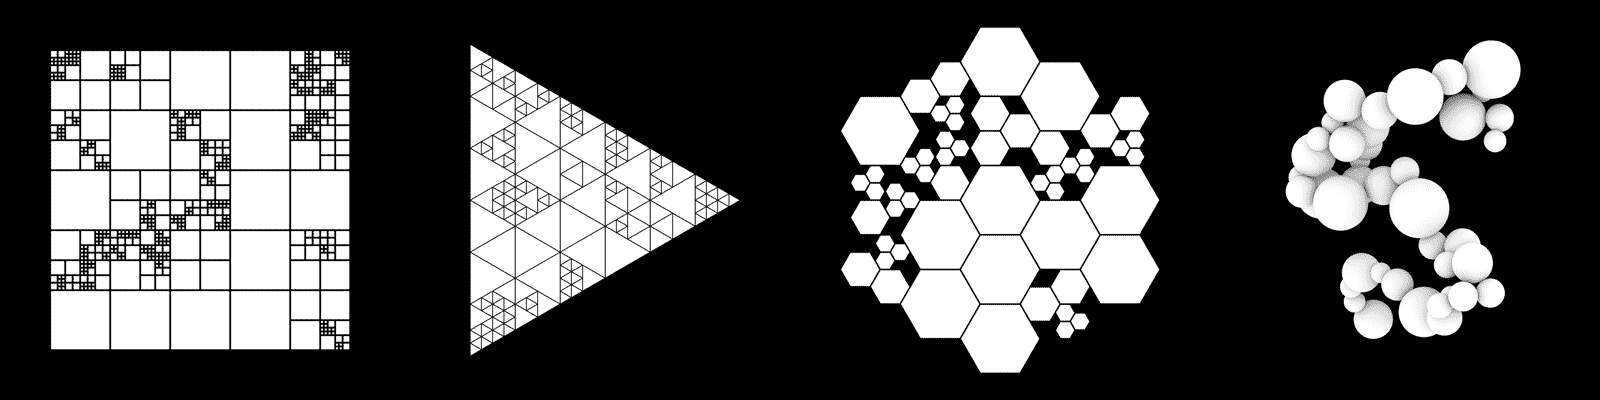 sample renders of the rectangular, triangular, hexagonal, and random walk features